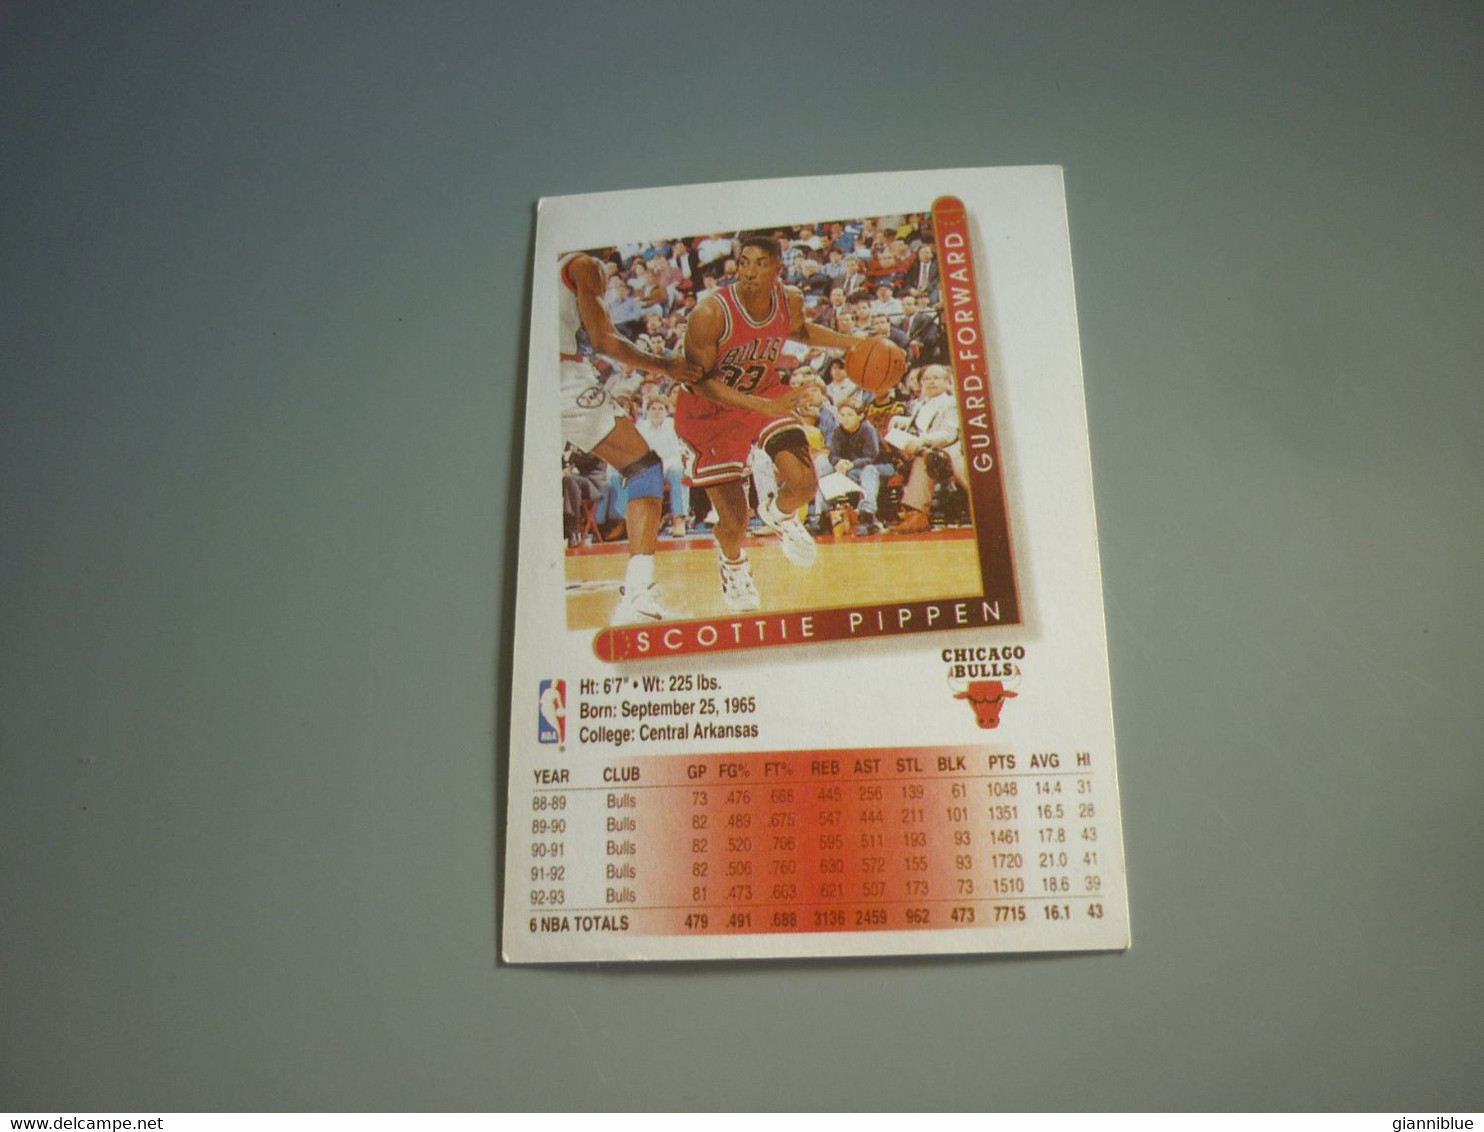 Scottie Pippen Chicago Bulls NBA Basketball '90s Rare Greek Edition Card - 1990-1999